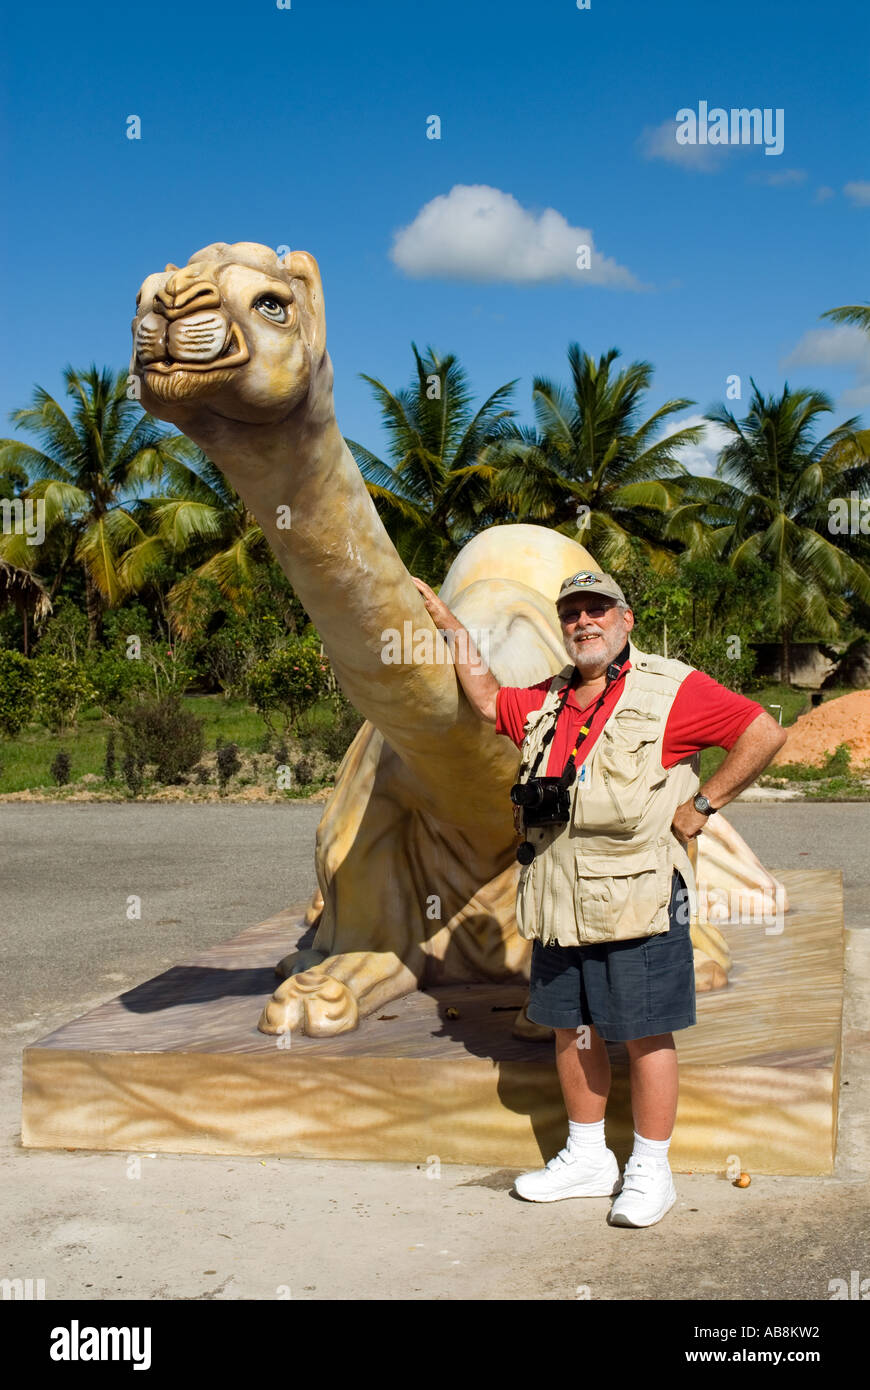 Caribbean West Indies Trinidad Carapichaima Sri Hanuman Murti Hindu Site Mature Male Tourist posing next to Camel Stock Photo